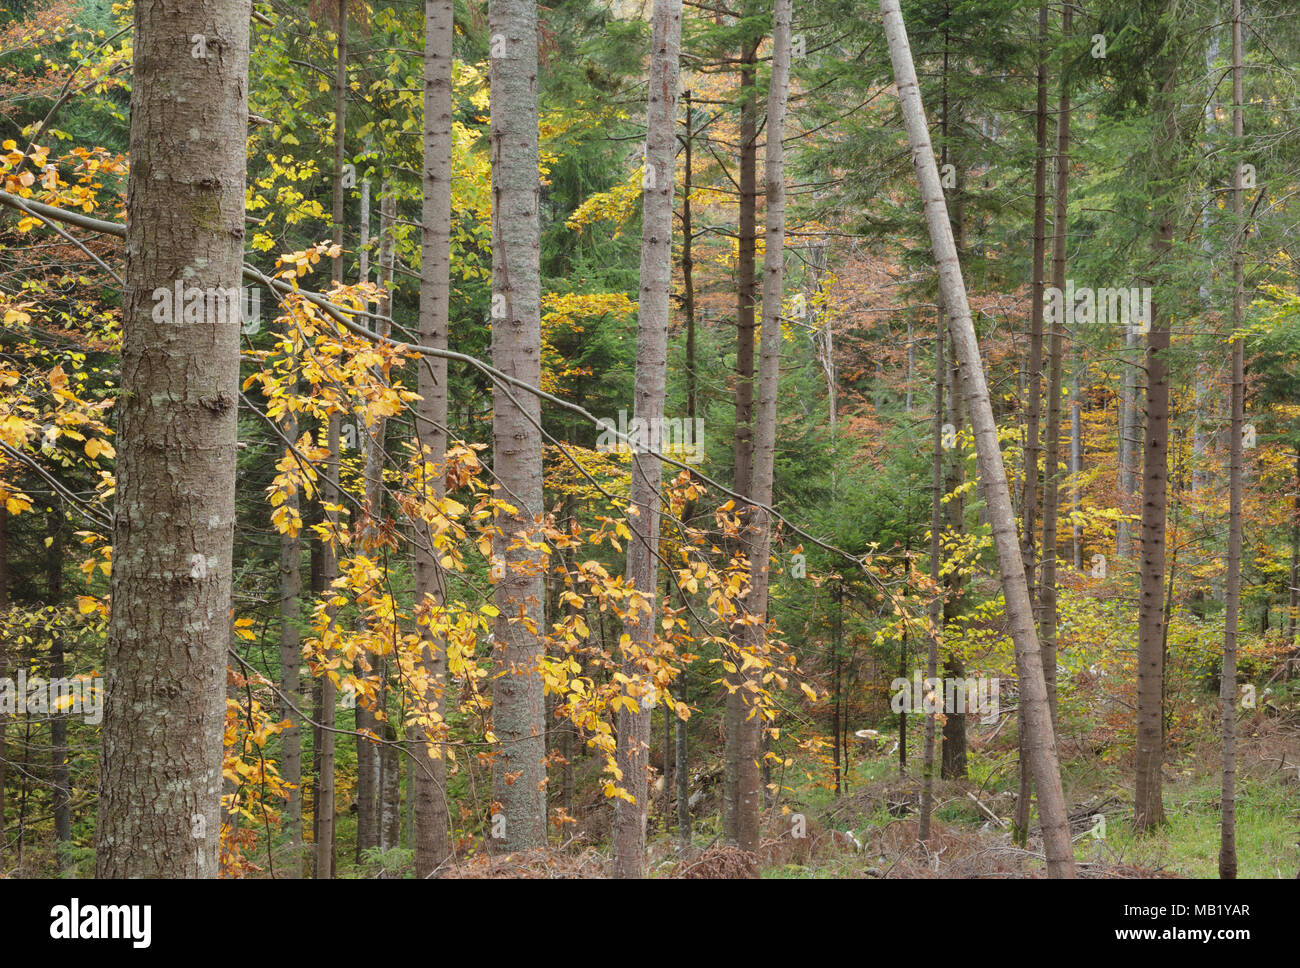 Pine trees (Pinus sp.) and Common Beech (Fagus sylvatica), mixed forest habitat, Tara National Park, Serbia, October Stock Photo